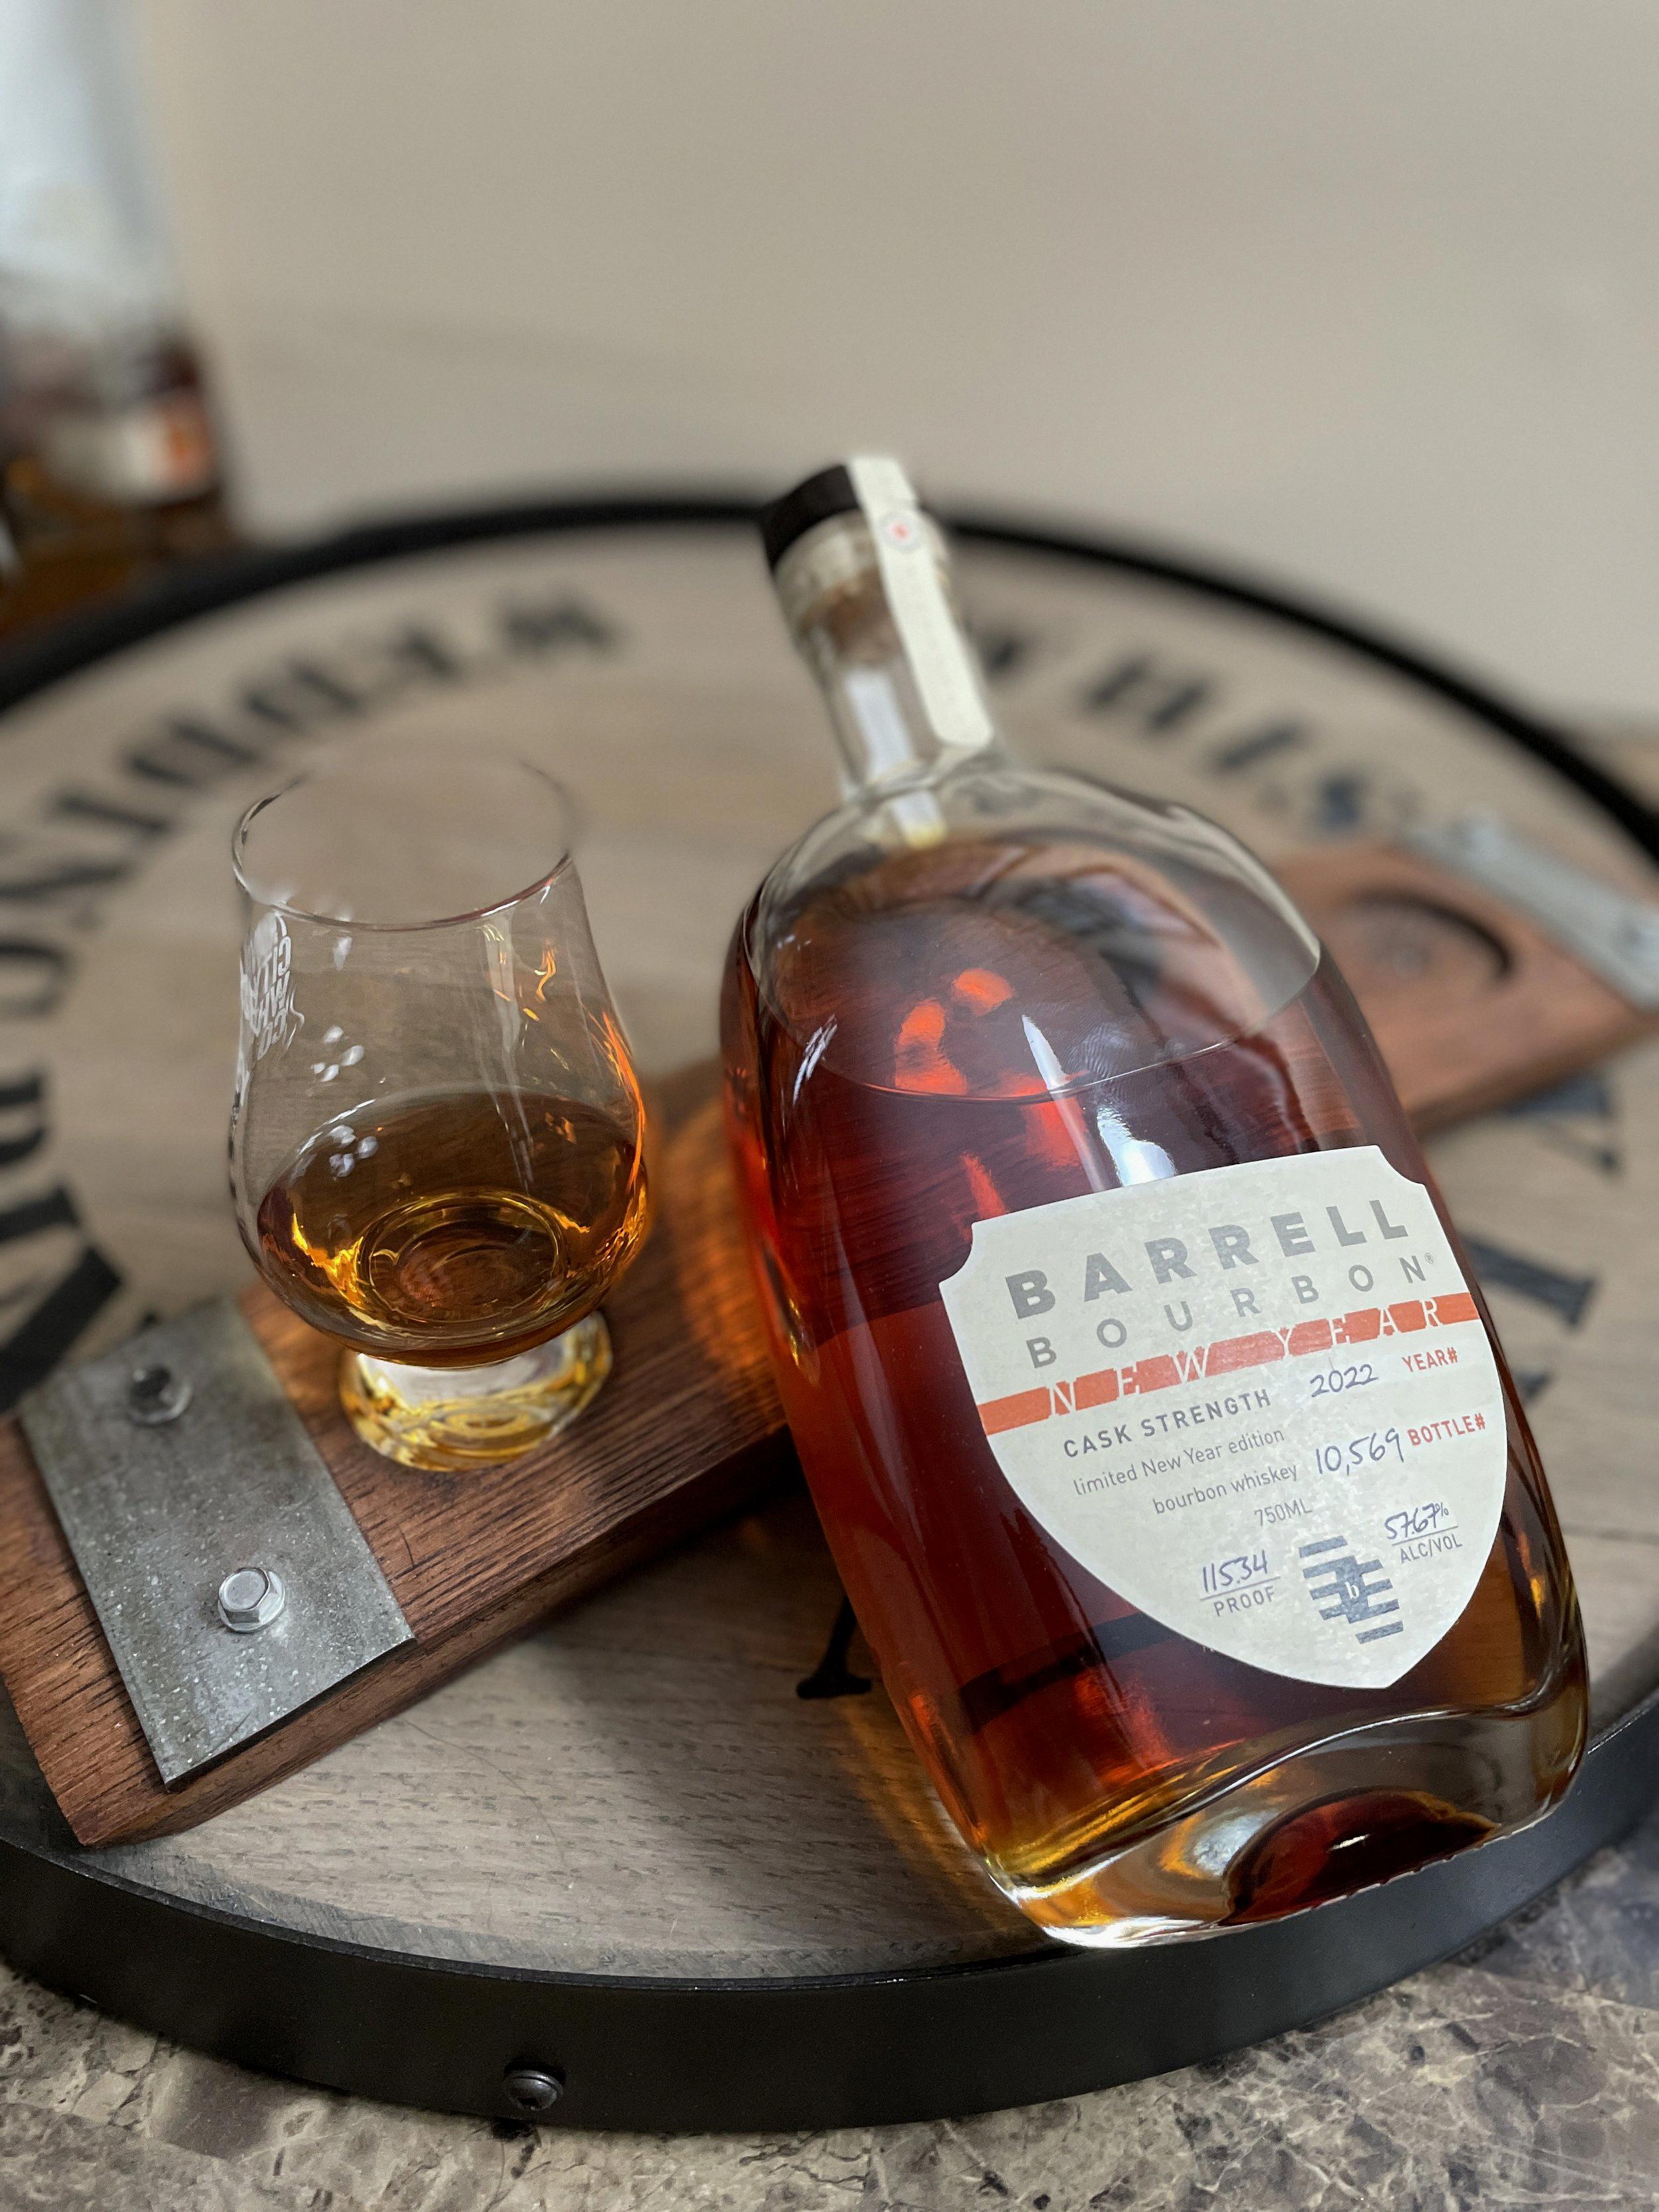 barrell bourbon new year 2022